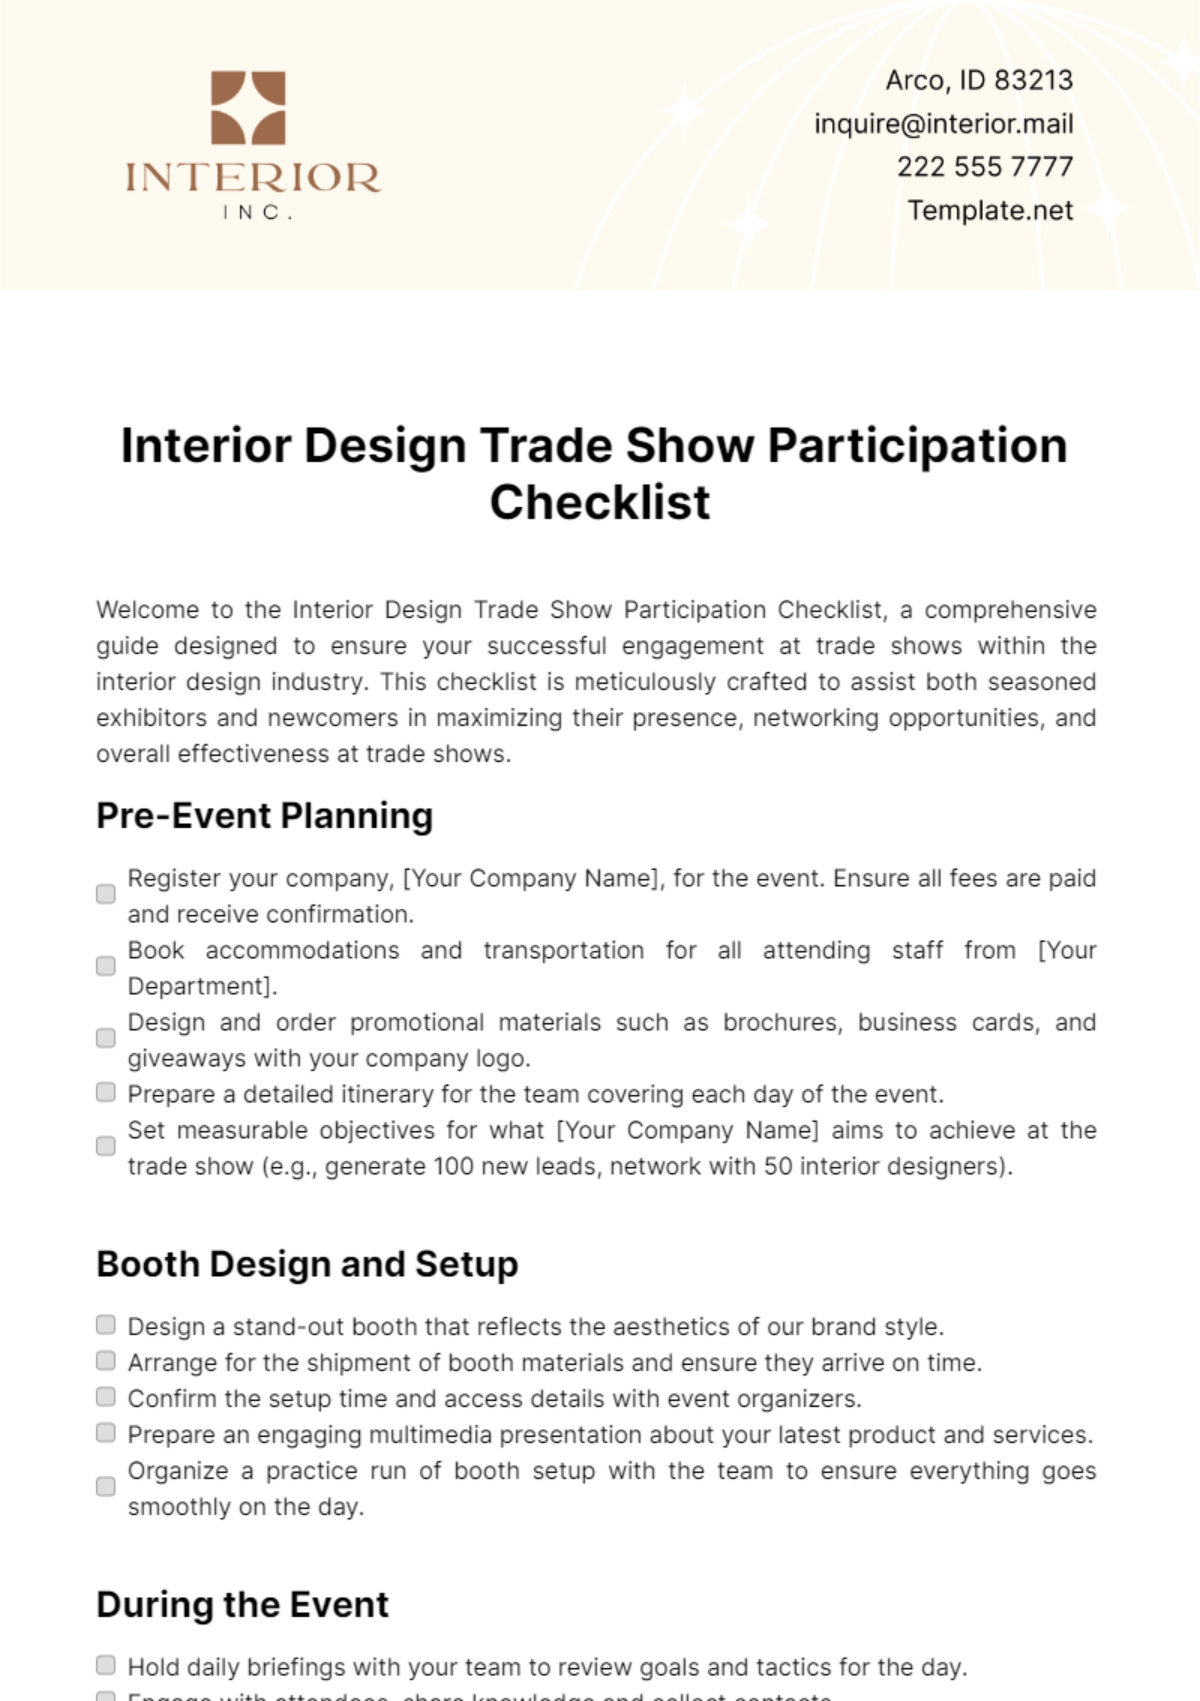 Free Interior Design Trade Show Participation Checklist Template